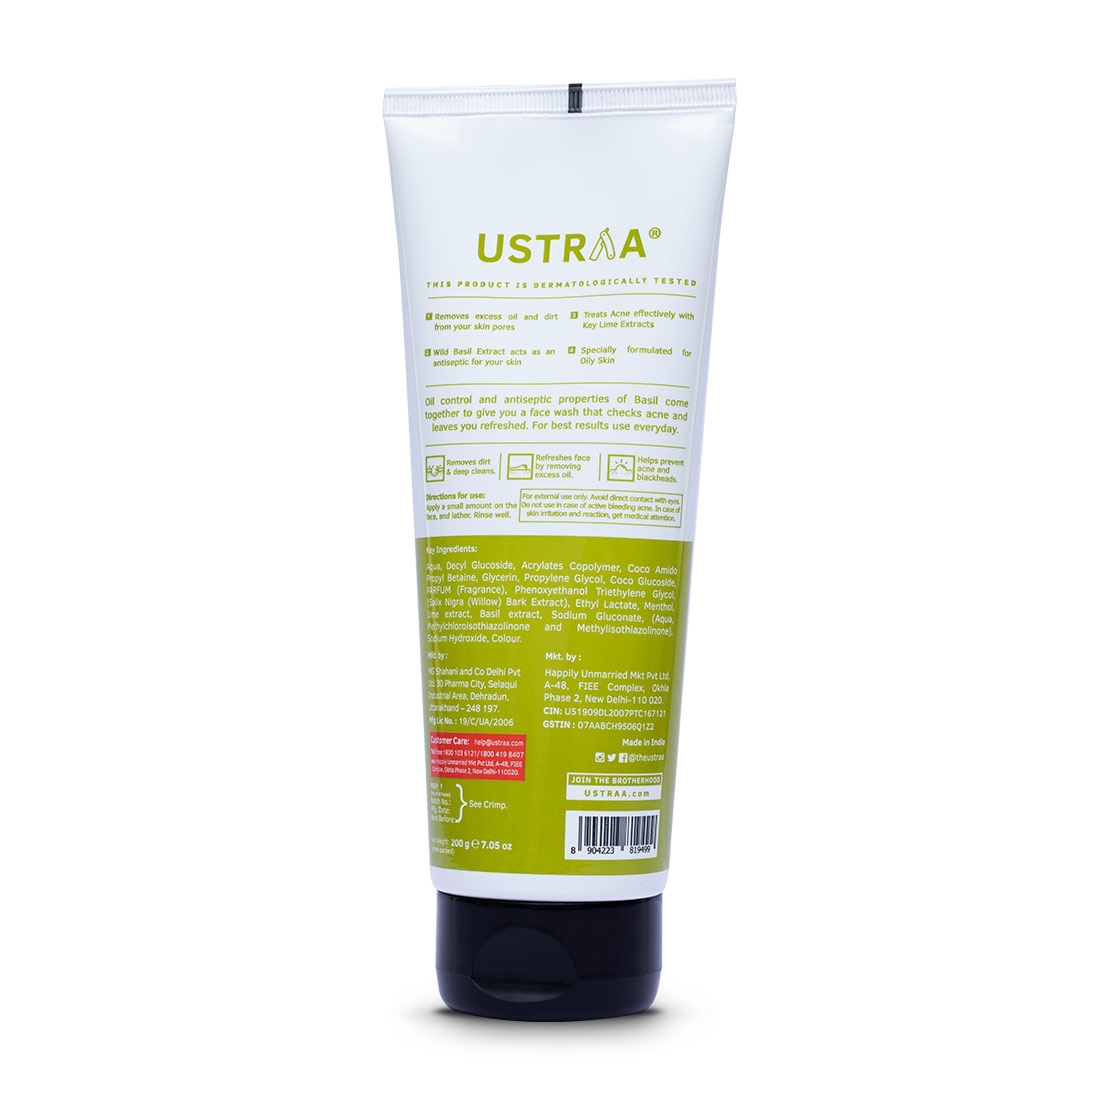 Ustraa | Ustraa Face Wash - Oily Skin (Checks Acne & Oil Control) - 200g Set Of 2 6